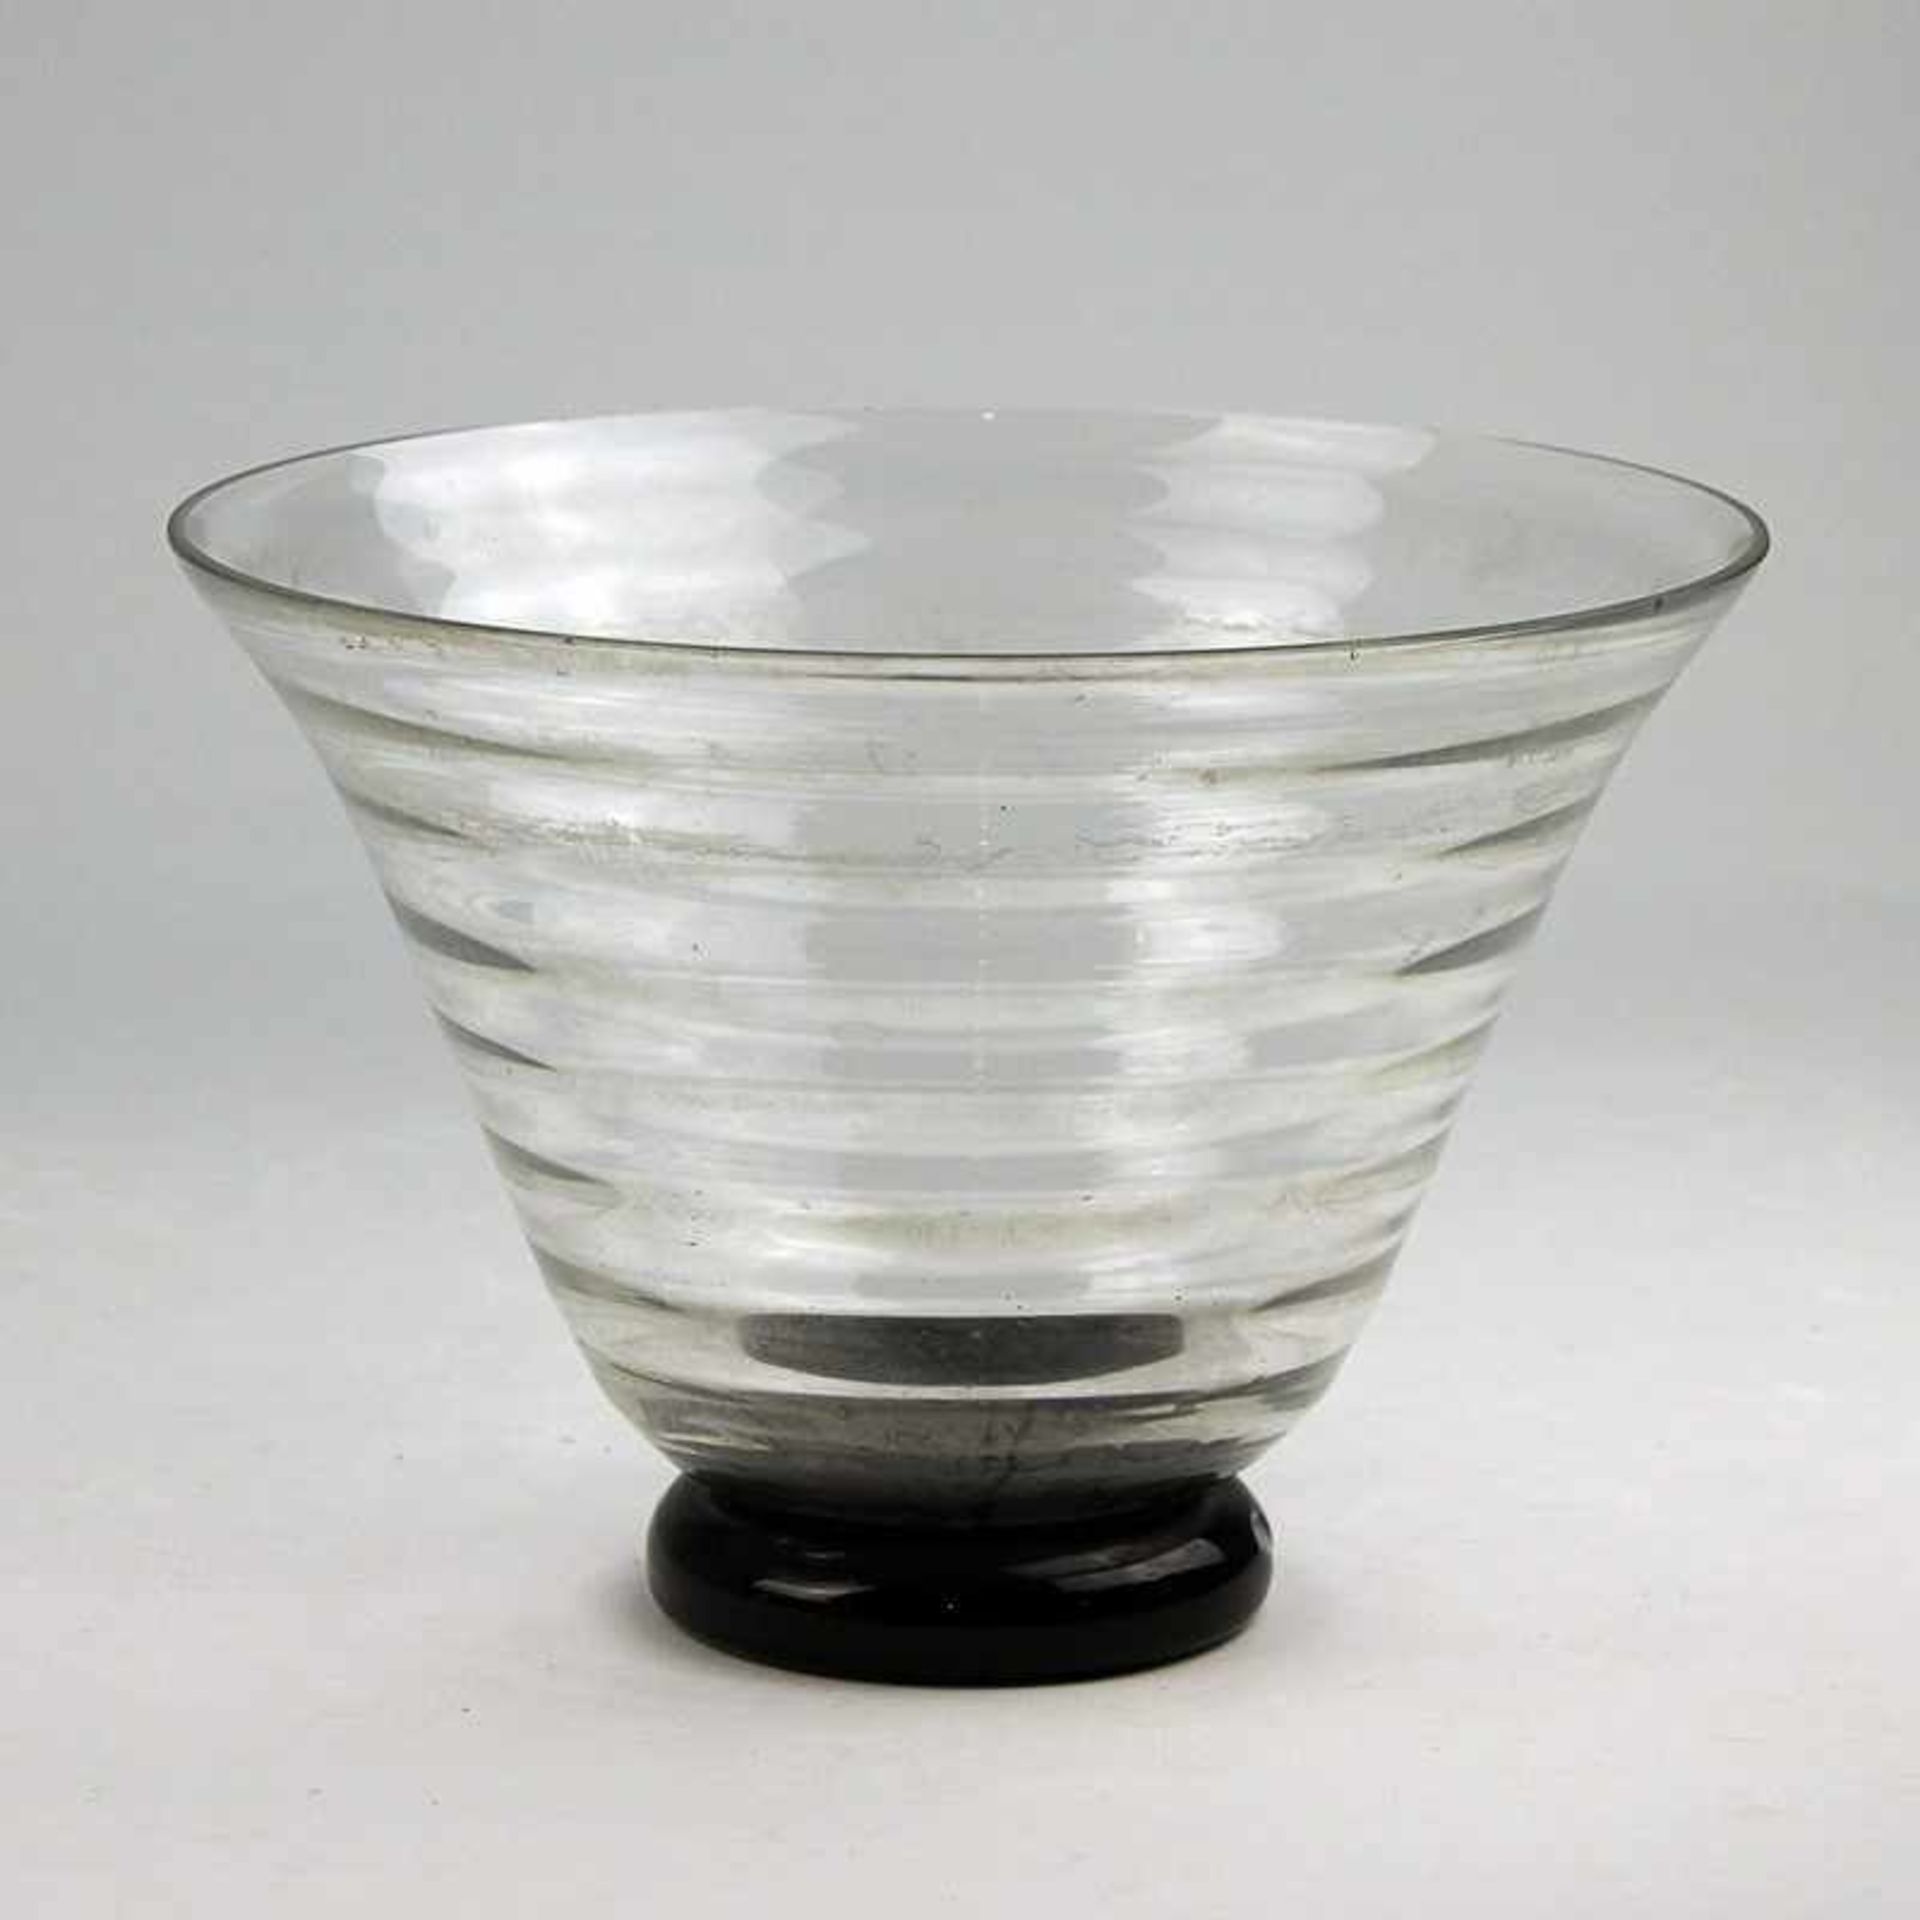 Daum Fréres - Vase um 1930, bez. Daum Fréres, Nancy, Frankreich, farbloses u. schwarzes Glas, runder